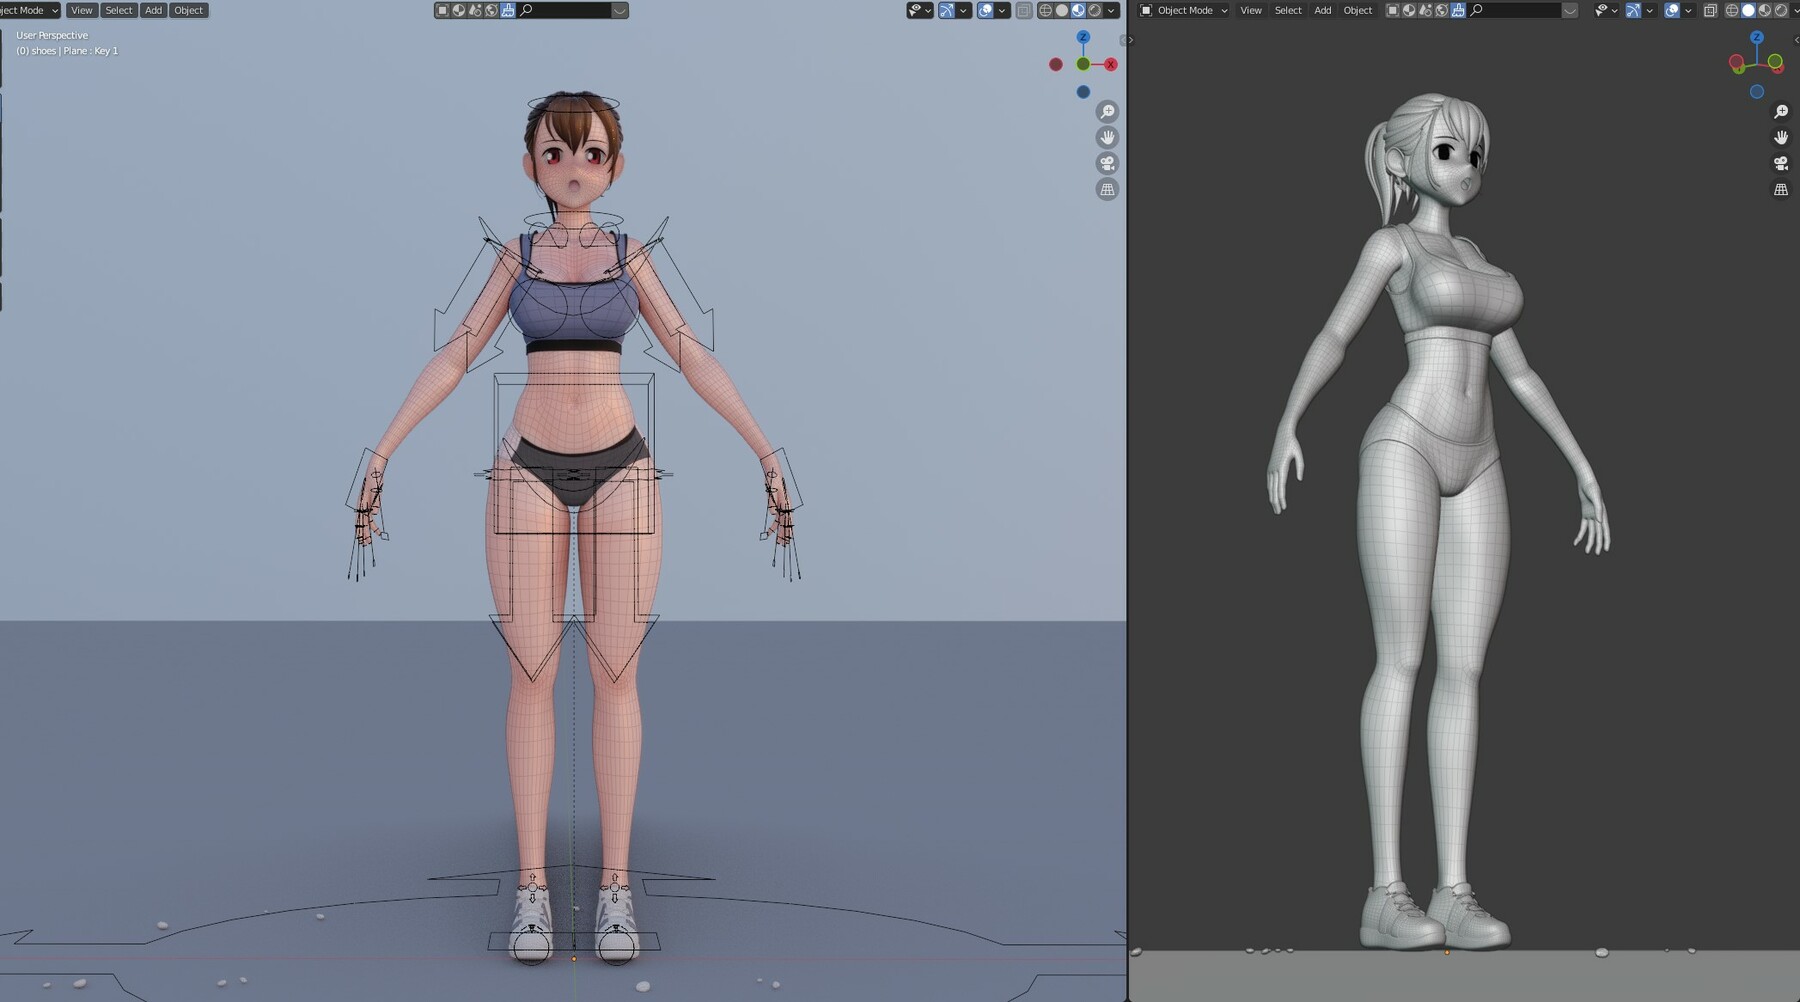 Anime Wolf Girl in Blender 3D model available  Tutorials Tips and  Tricks  Blender Artists Community